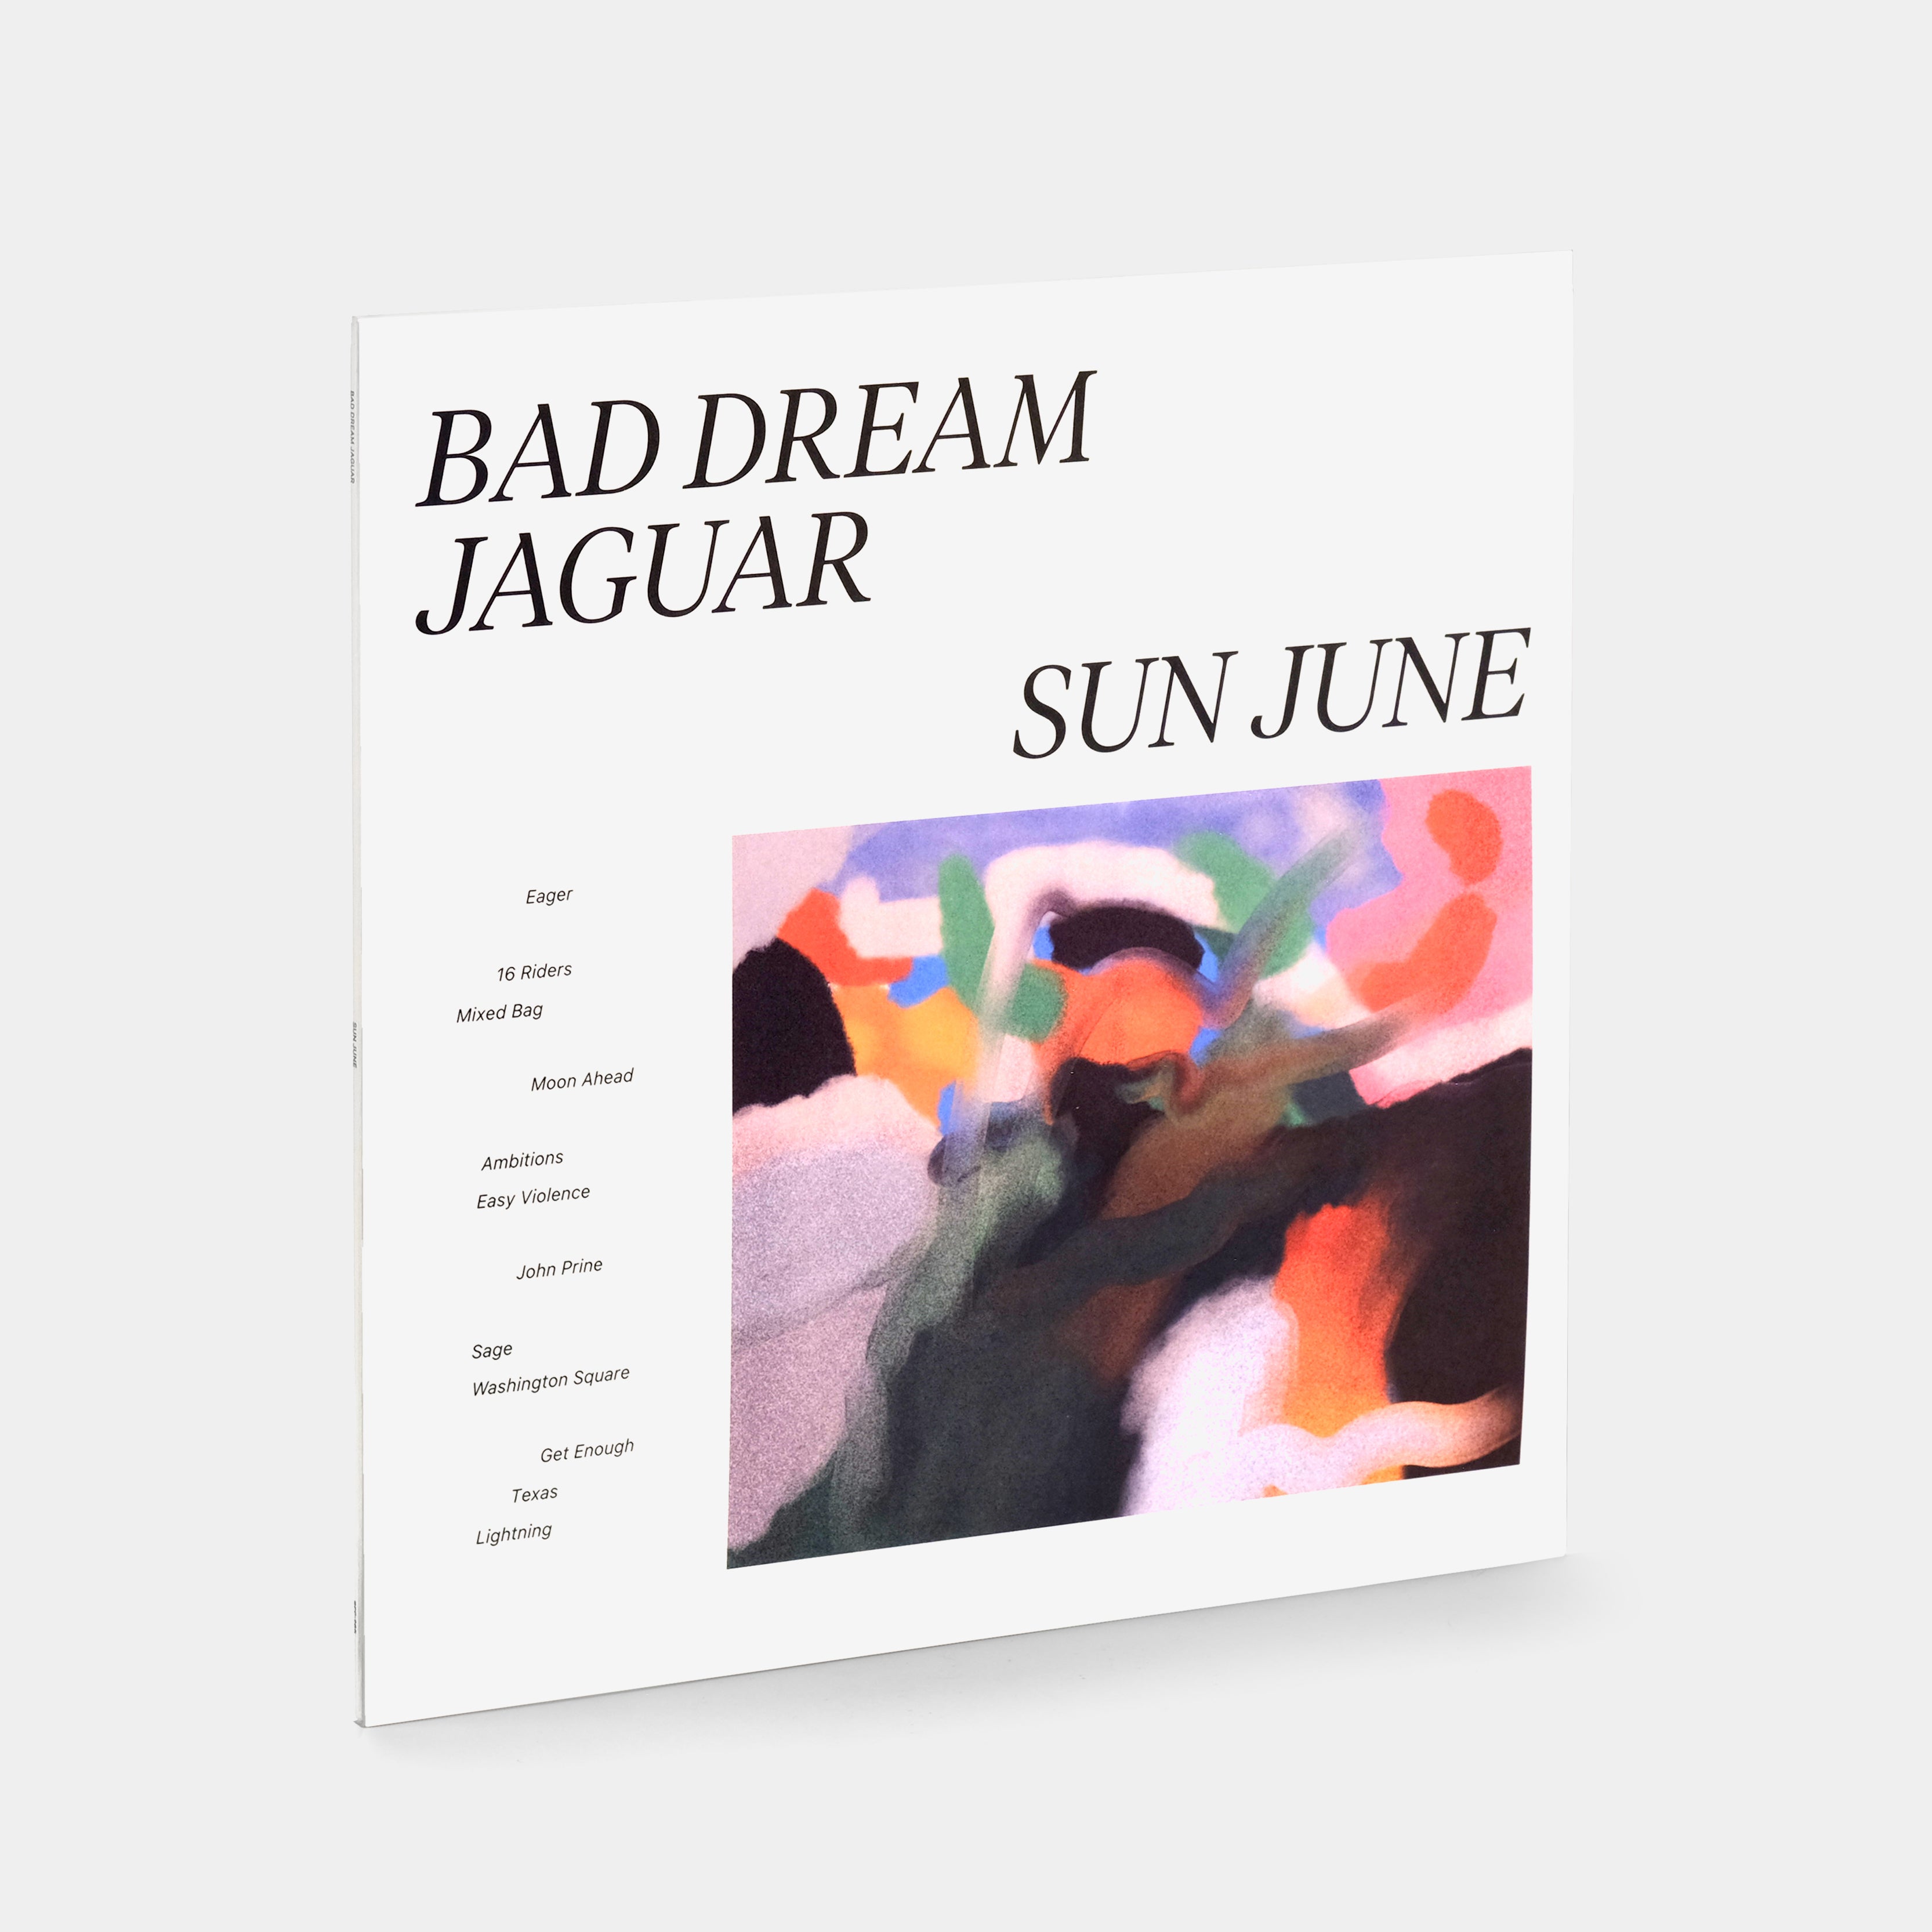 Sun June - Bad Dream Jaguar Transparent Purple LP Vinyl Record